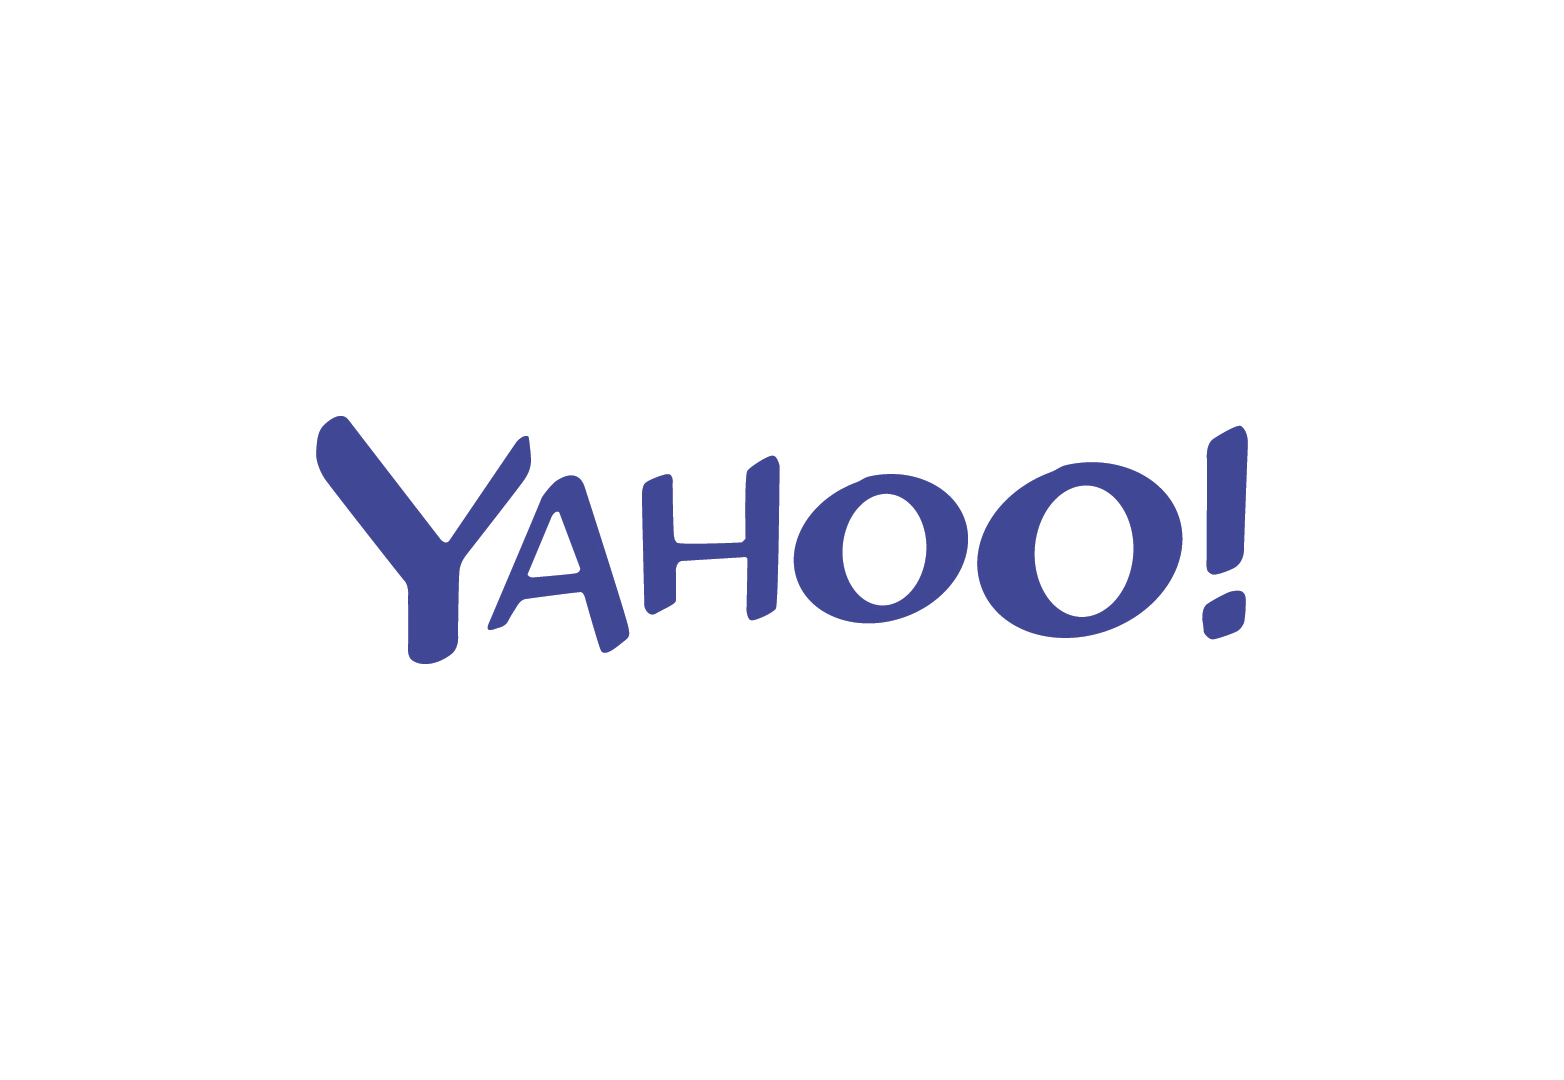 Yahoo considering rebranding? | WDD